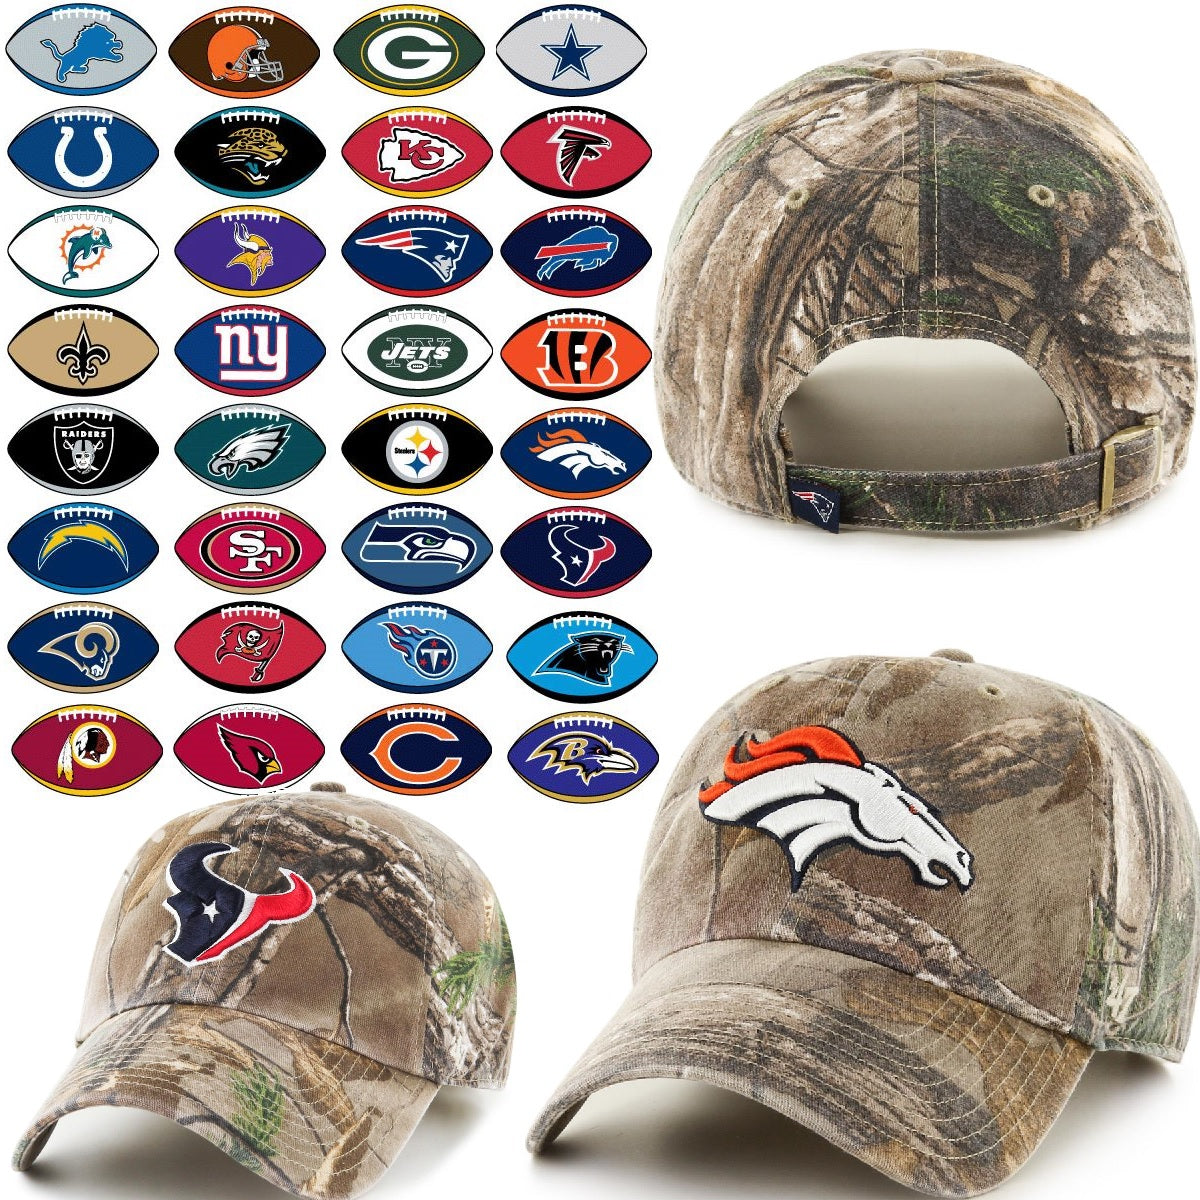 Officially Licensed NFL 47 Brand Men's Camo Hat - Eagles